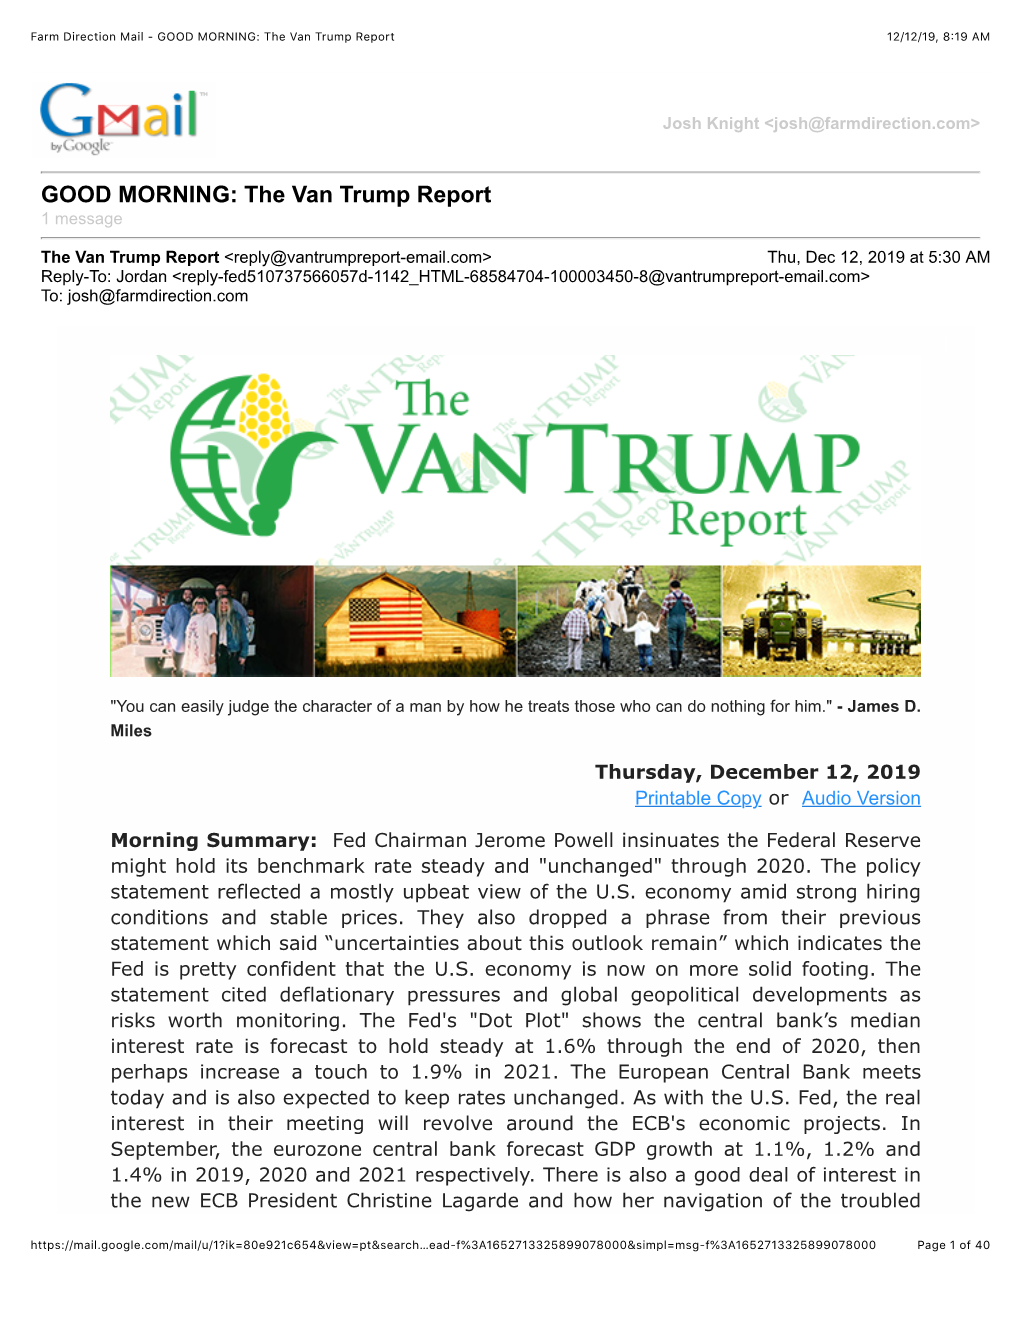 Farm Direction Mail - GOOD MORNING: the Van Trump Report 12/12/19, 8:19 AM